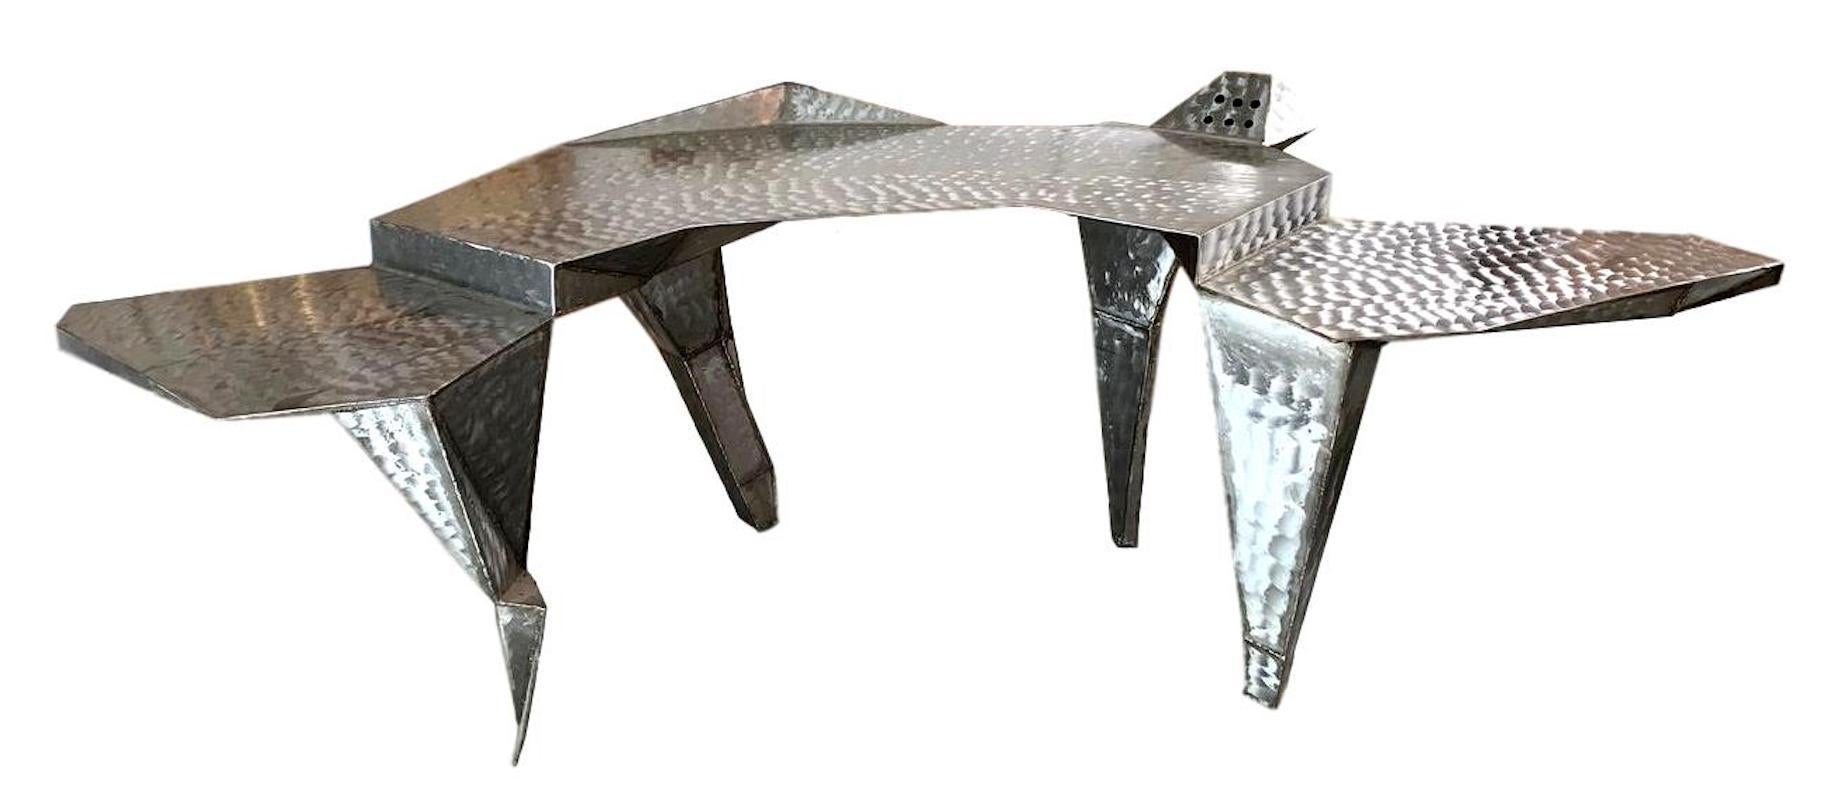 American Sculptural Steel Desk by Bruce Gray